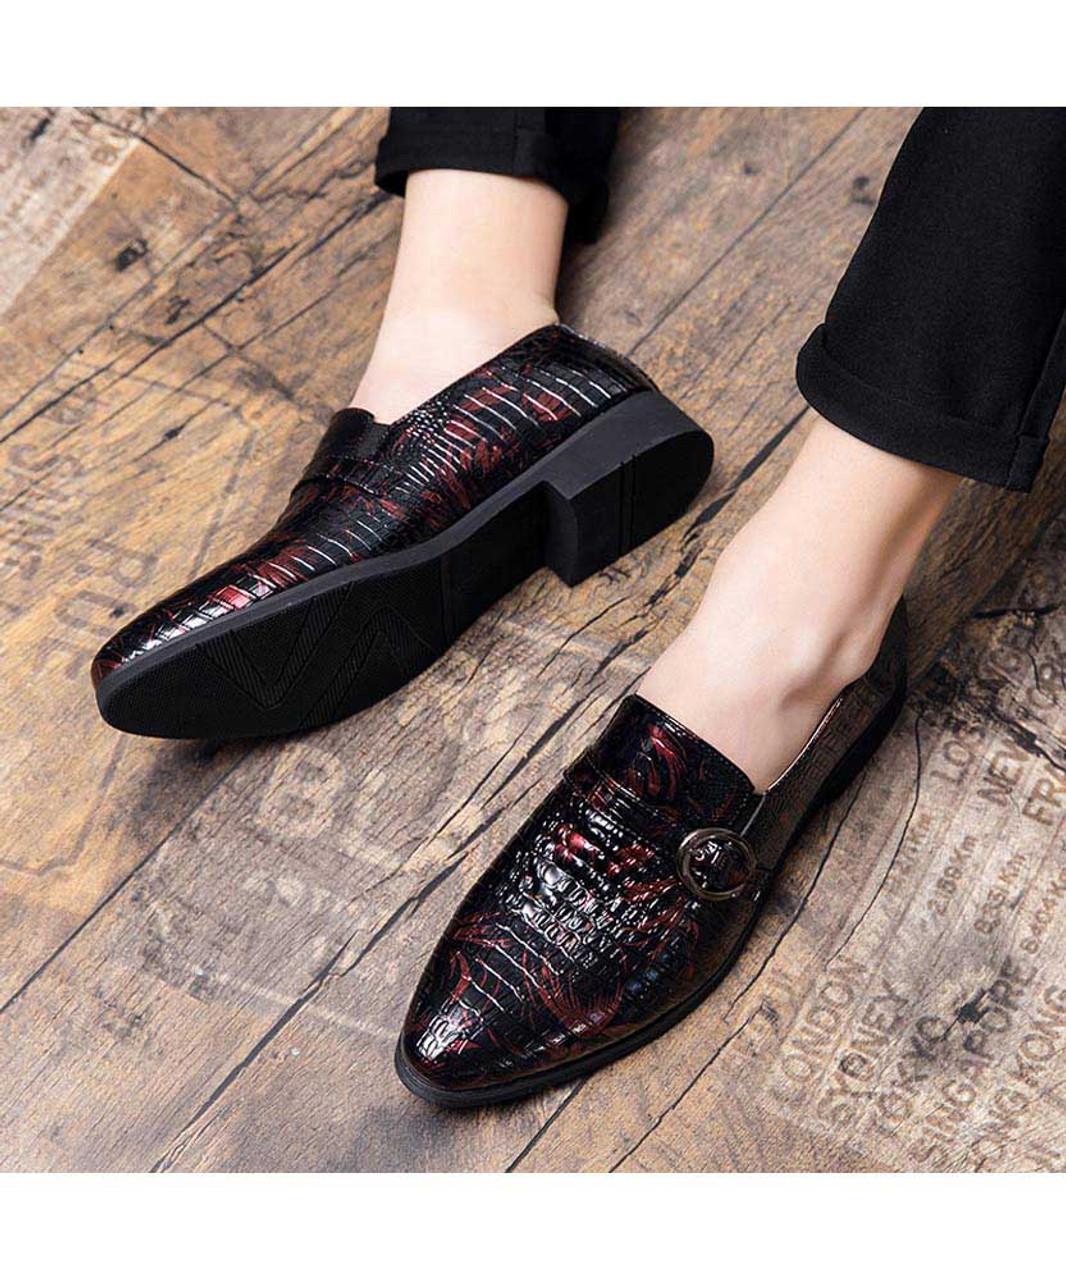 Red croc skin pattern buckle strap slip on dress shoe | Mens dress ...